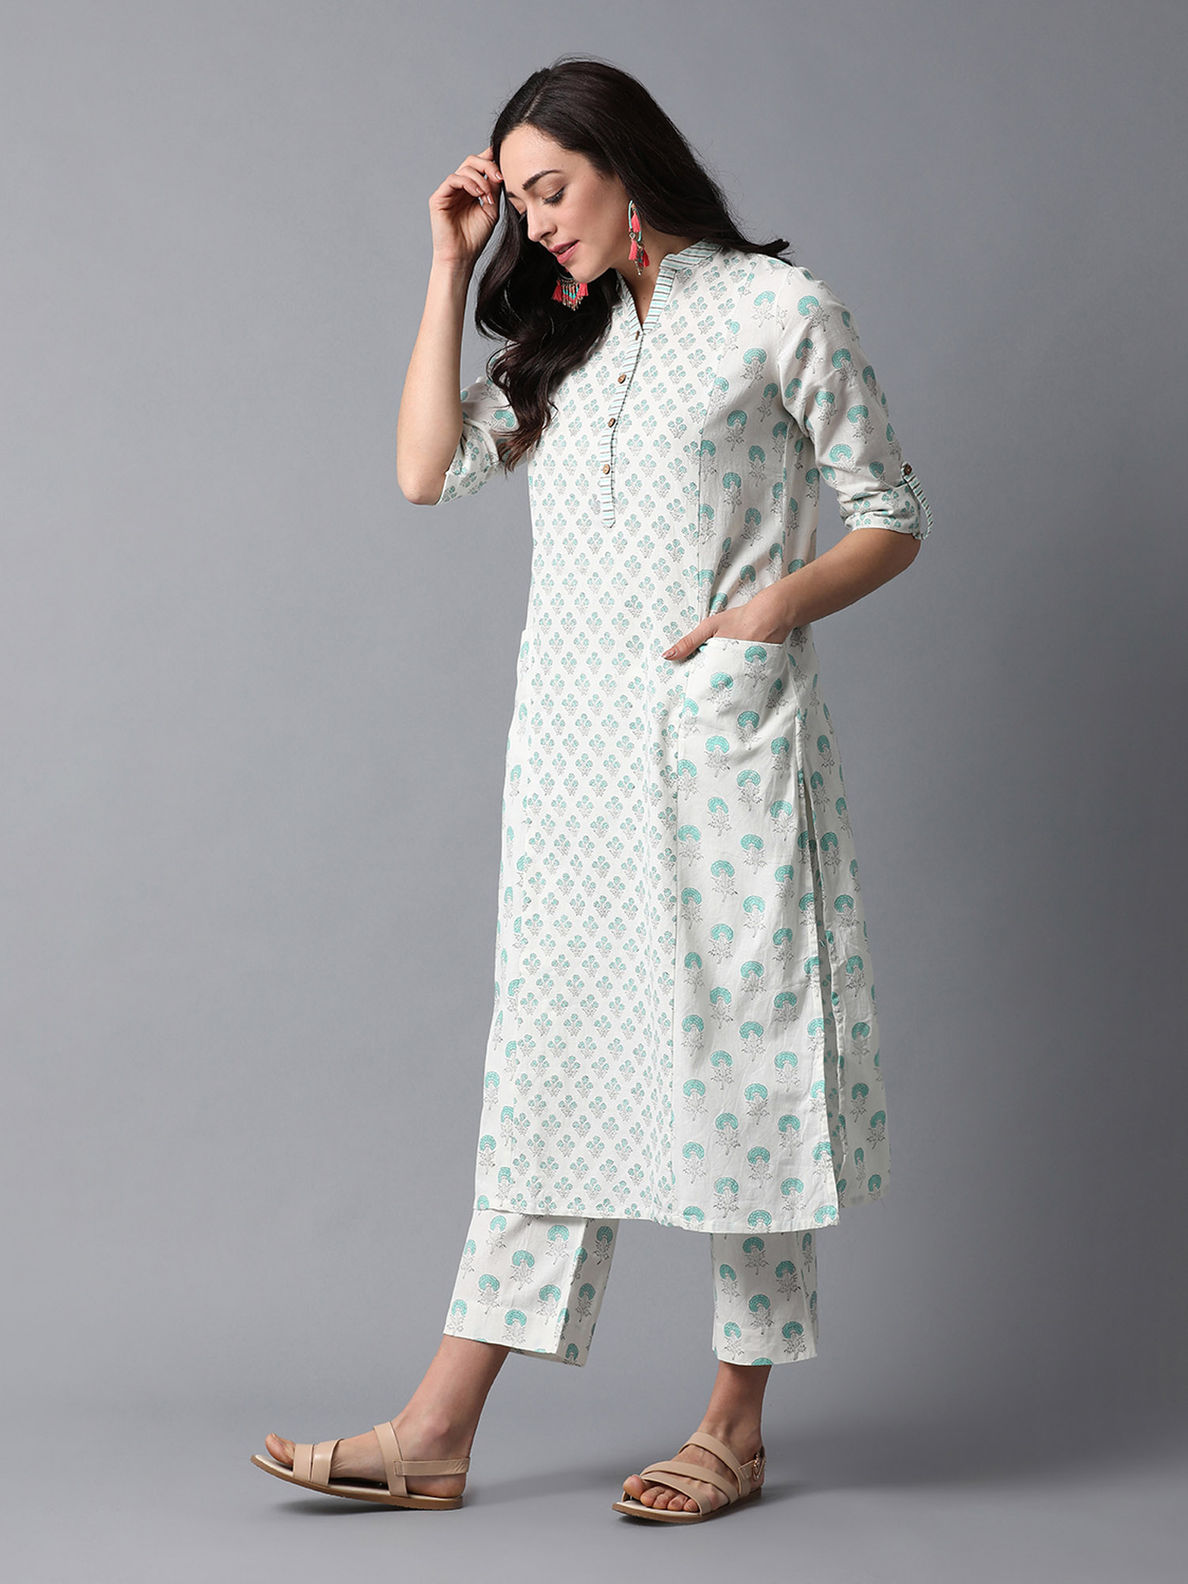 Front Pocket Checks Design Cotton Kurti at Rs367Piece in surat offer by  Arya Dress Maker Surat